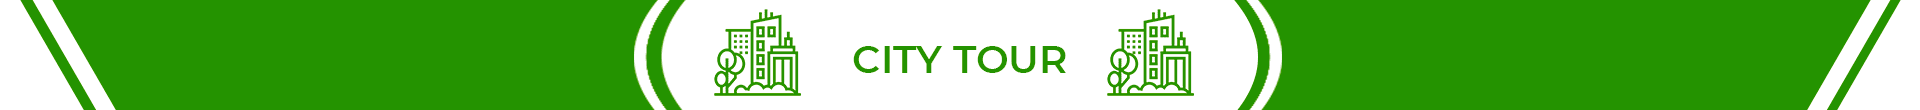 titulo-city-tour-rio-de-janeiro-1